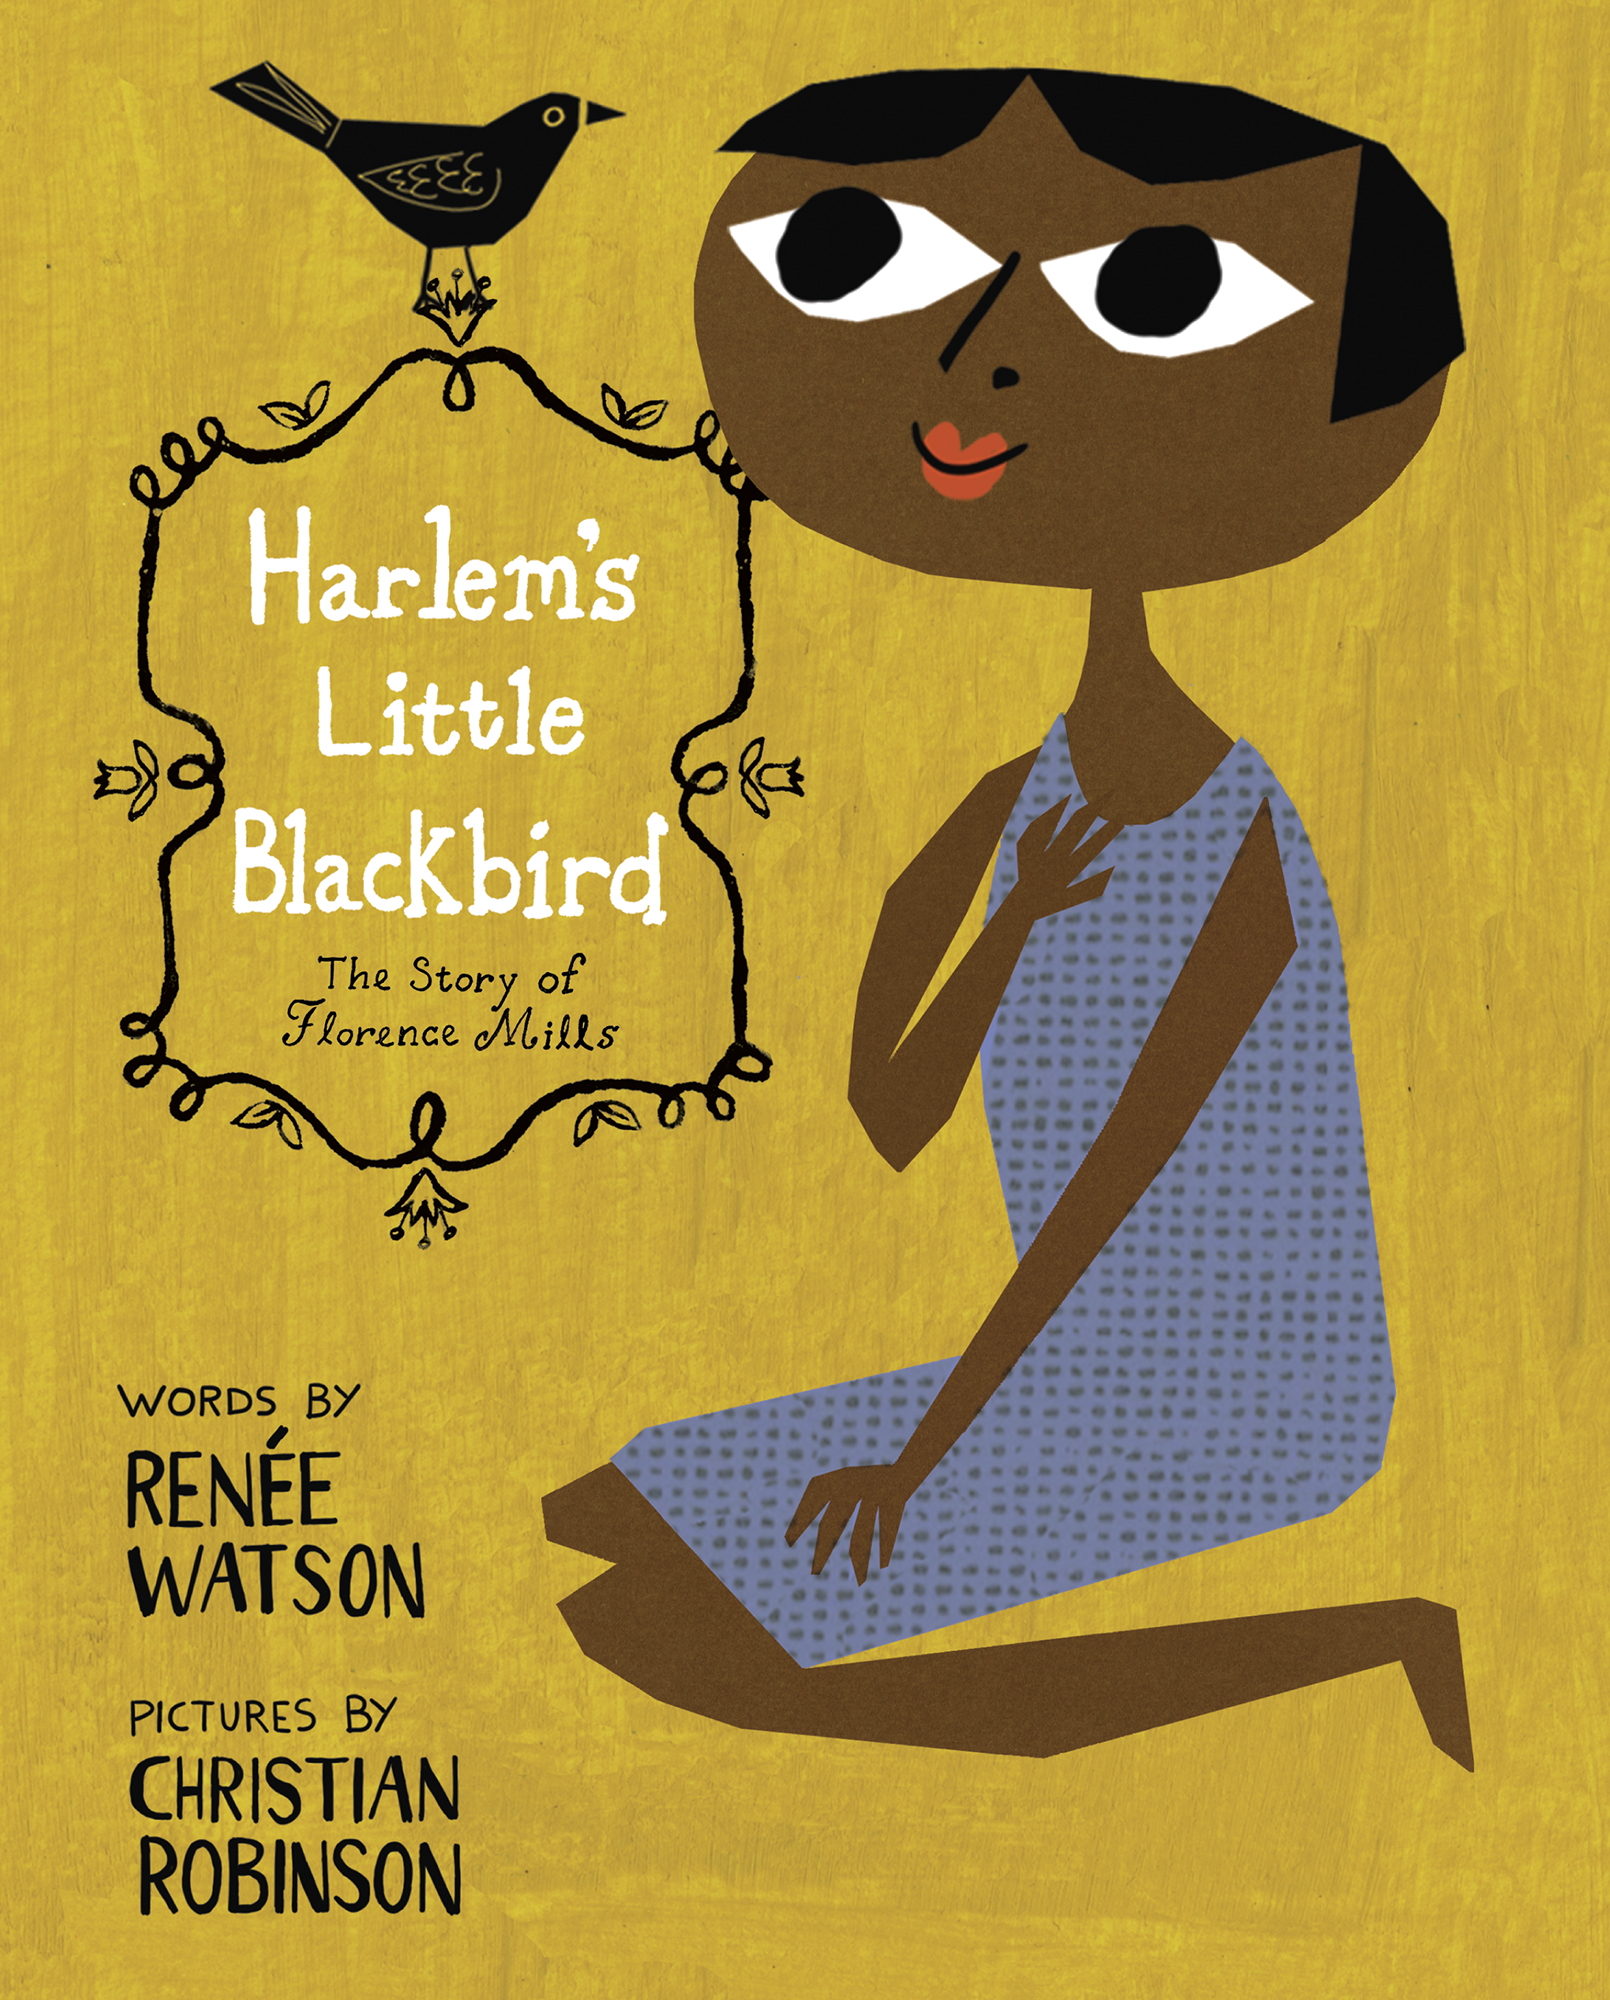 Harlem’s Little Blackbird: The Story of Florence Mills (Renée Watson & Christian Robinson; Random House)